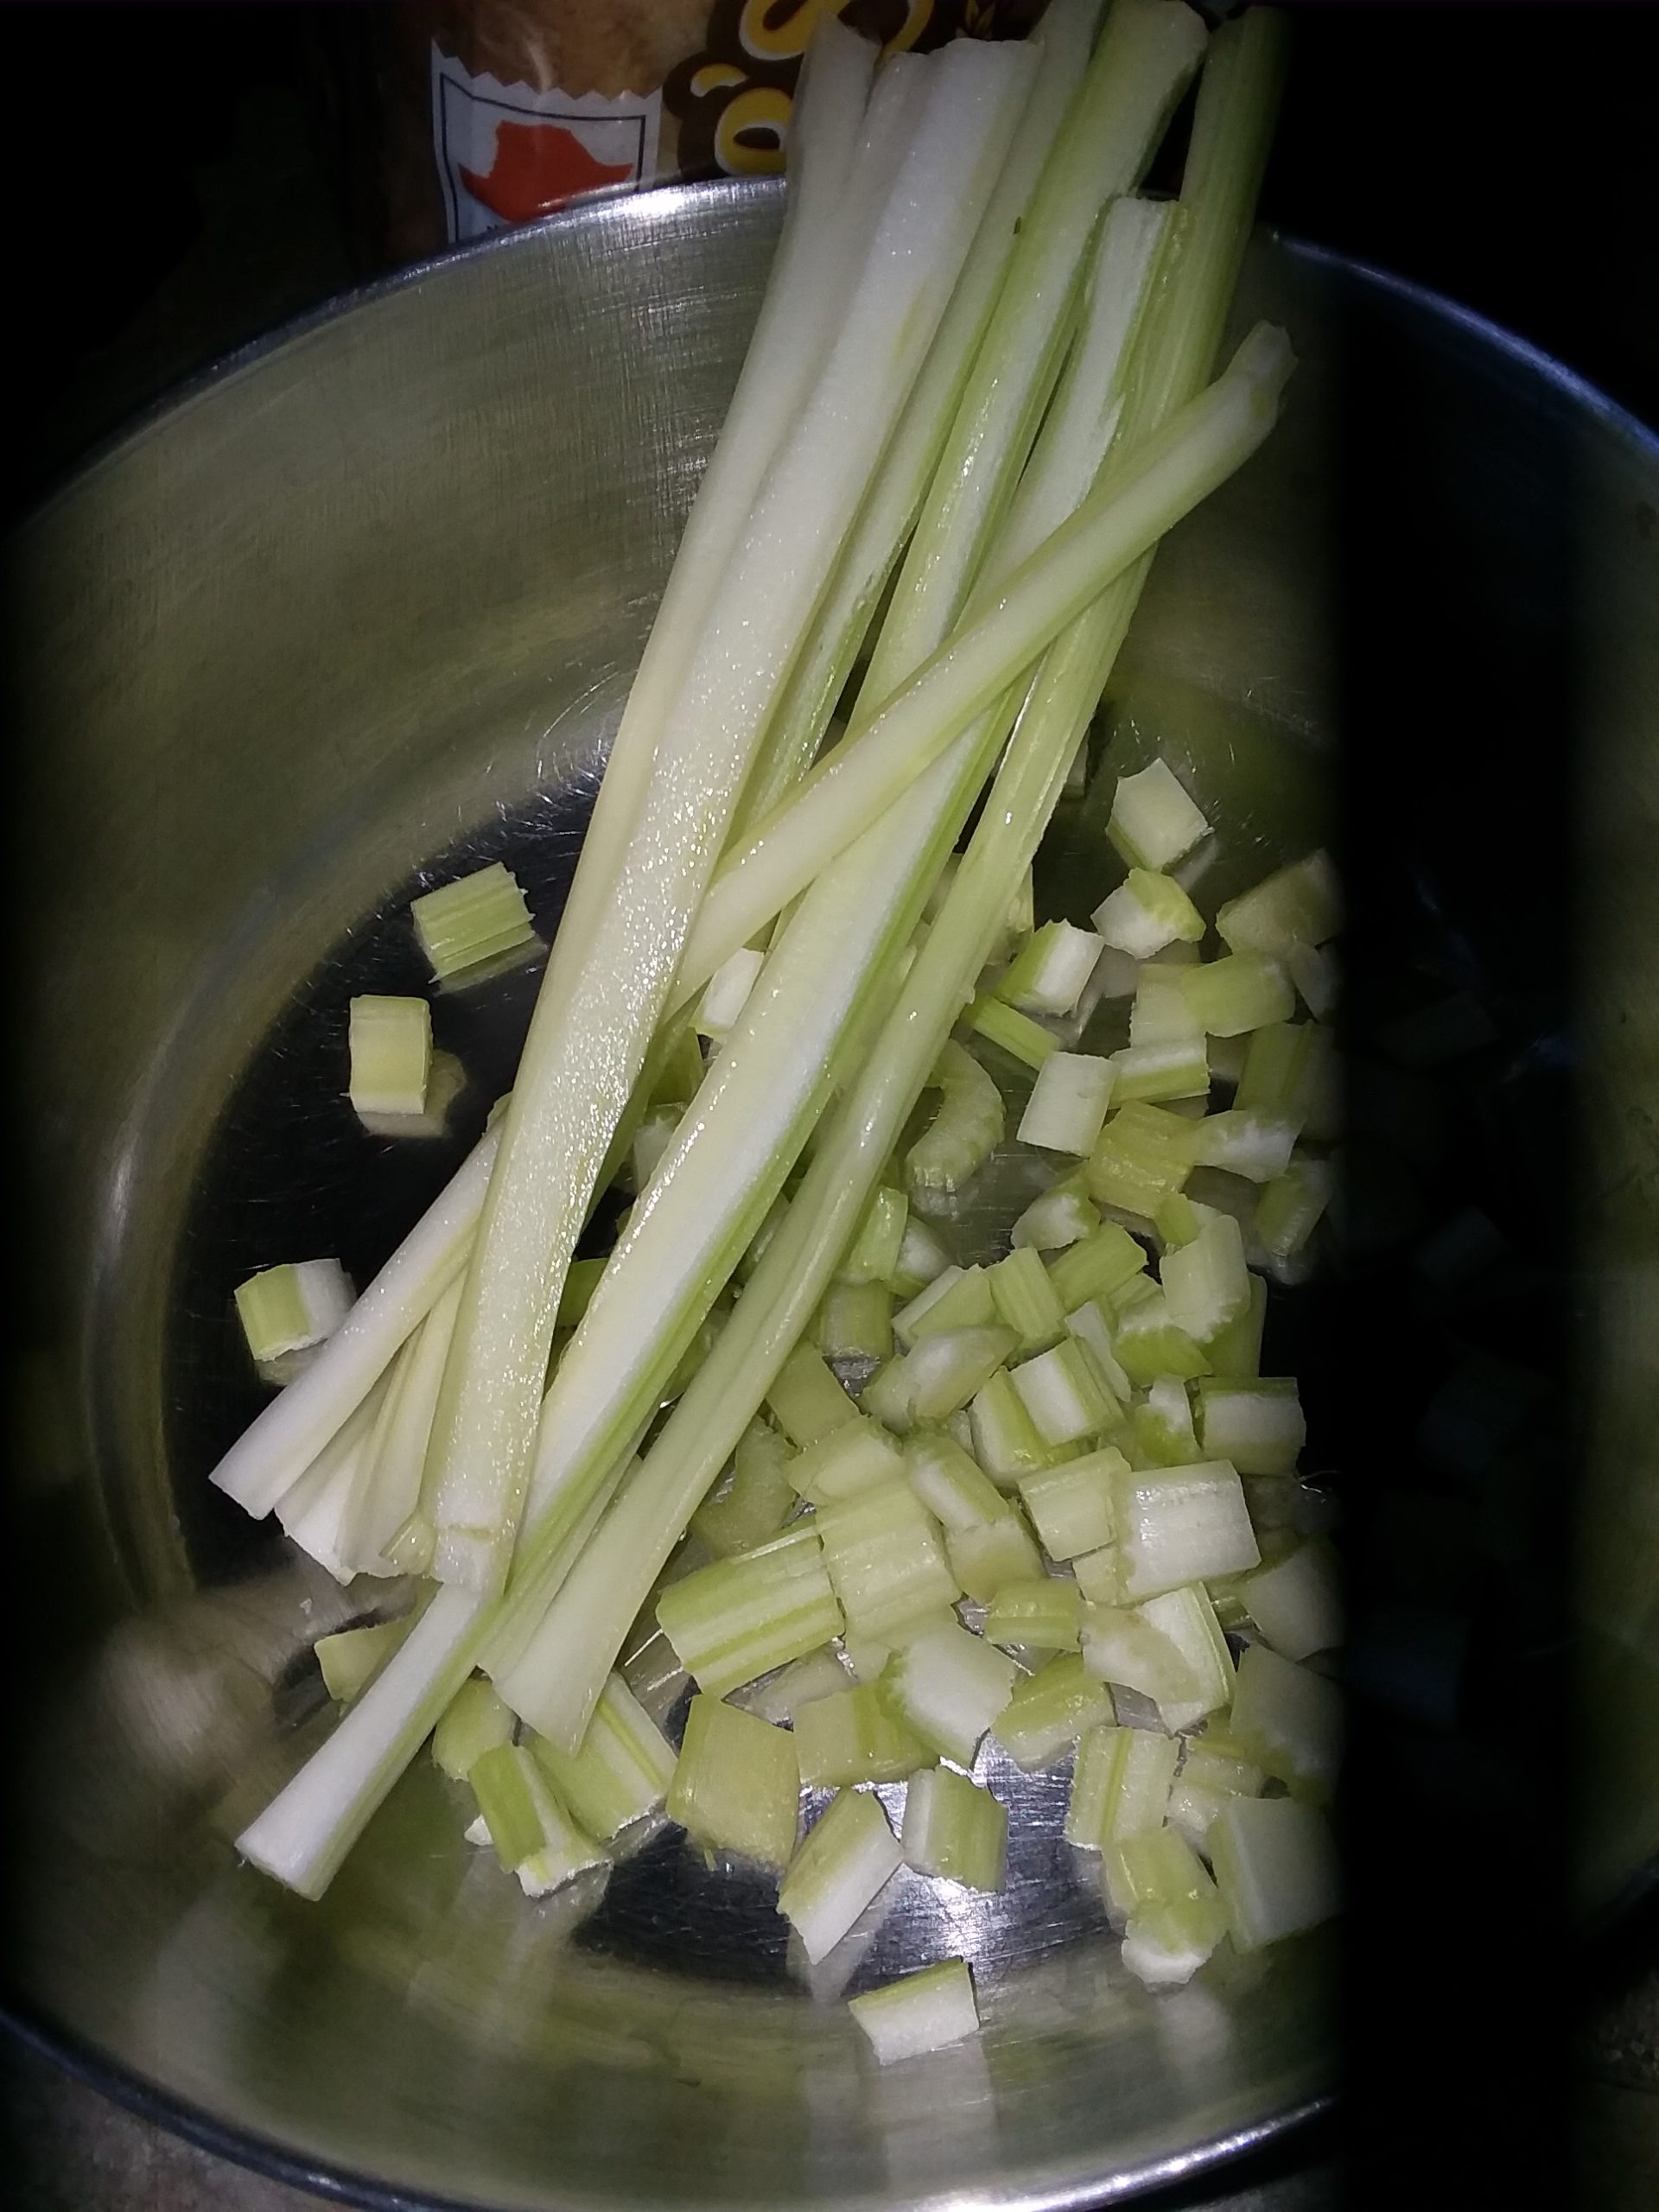 Chopped celery